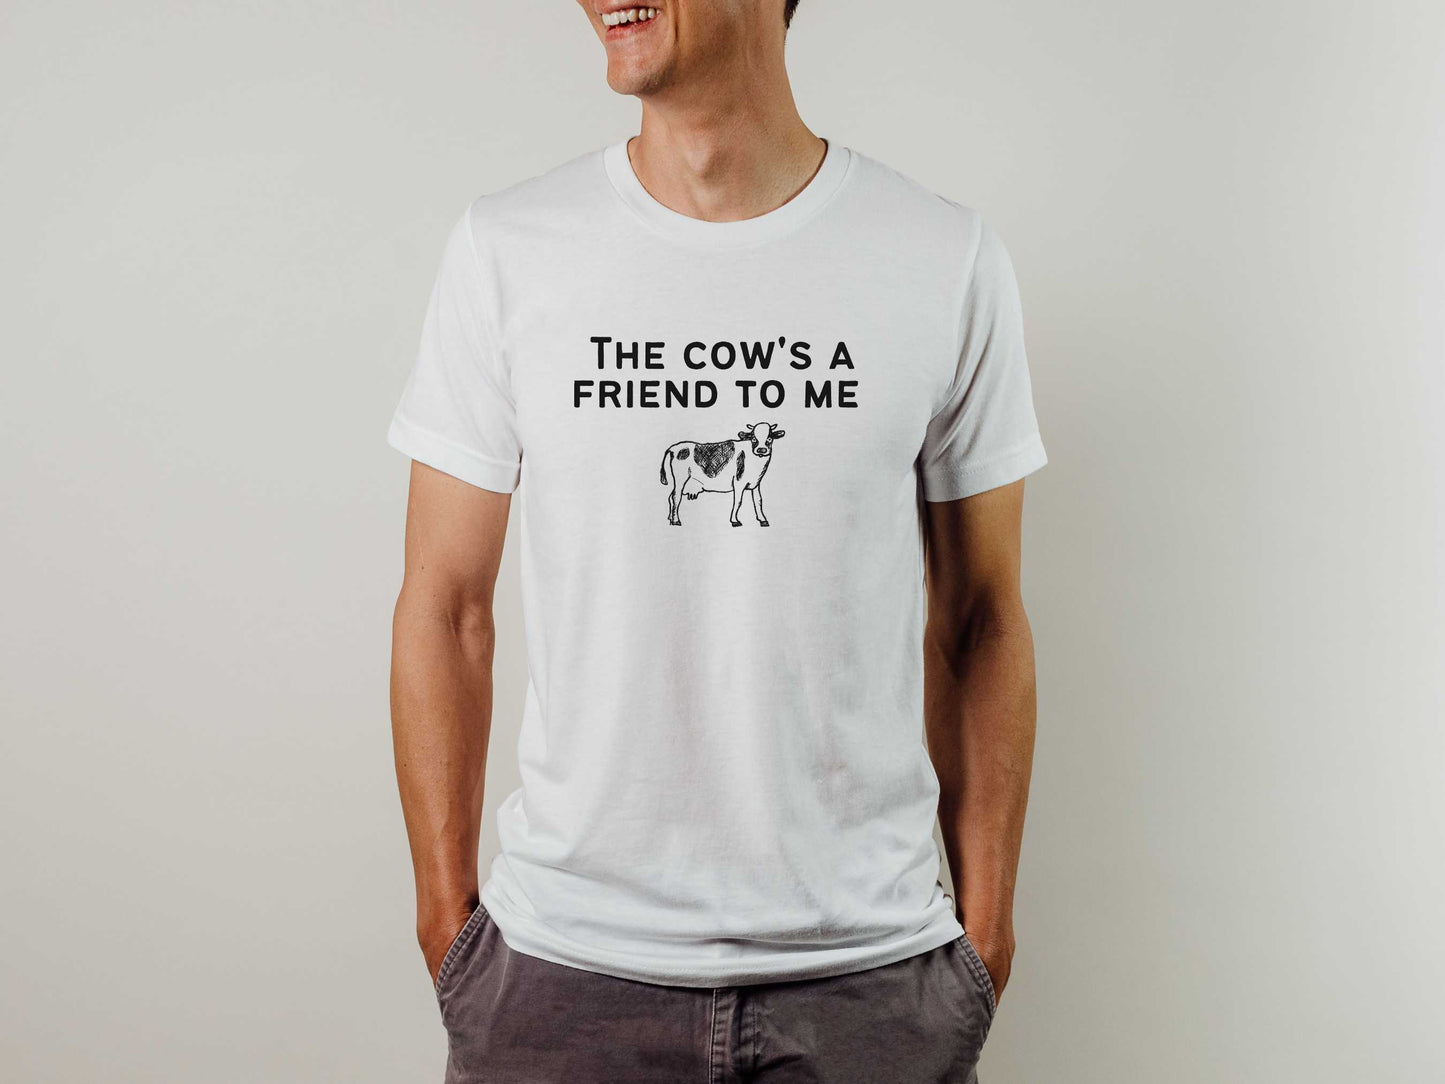 TMBG Cowtown T-Shirt in White